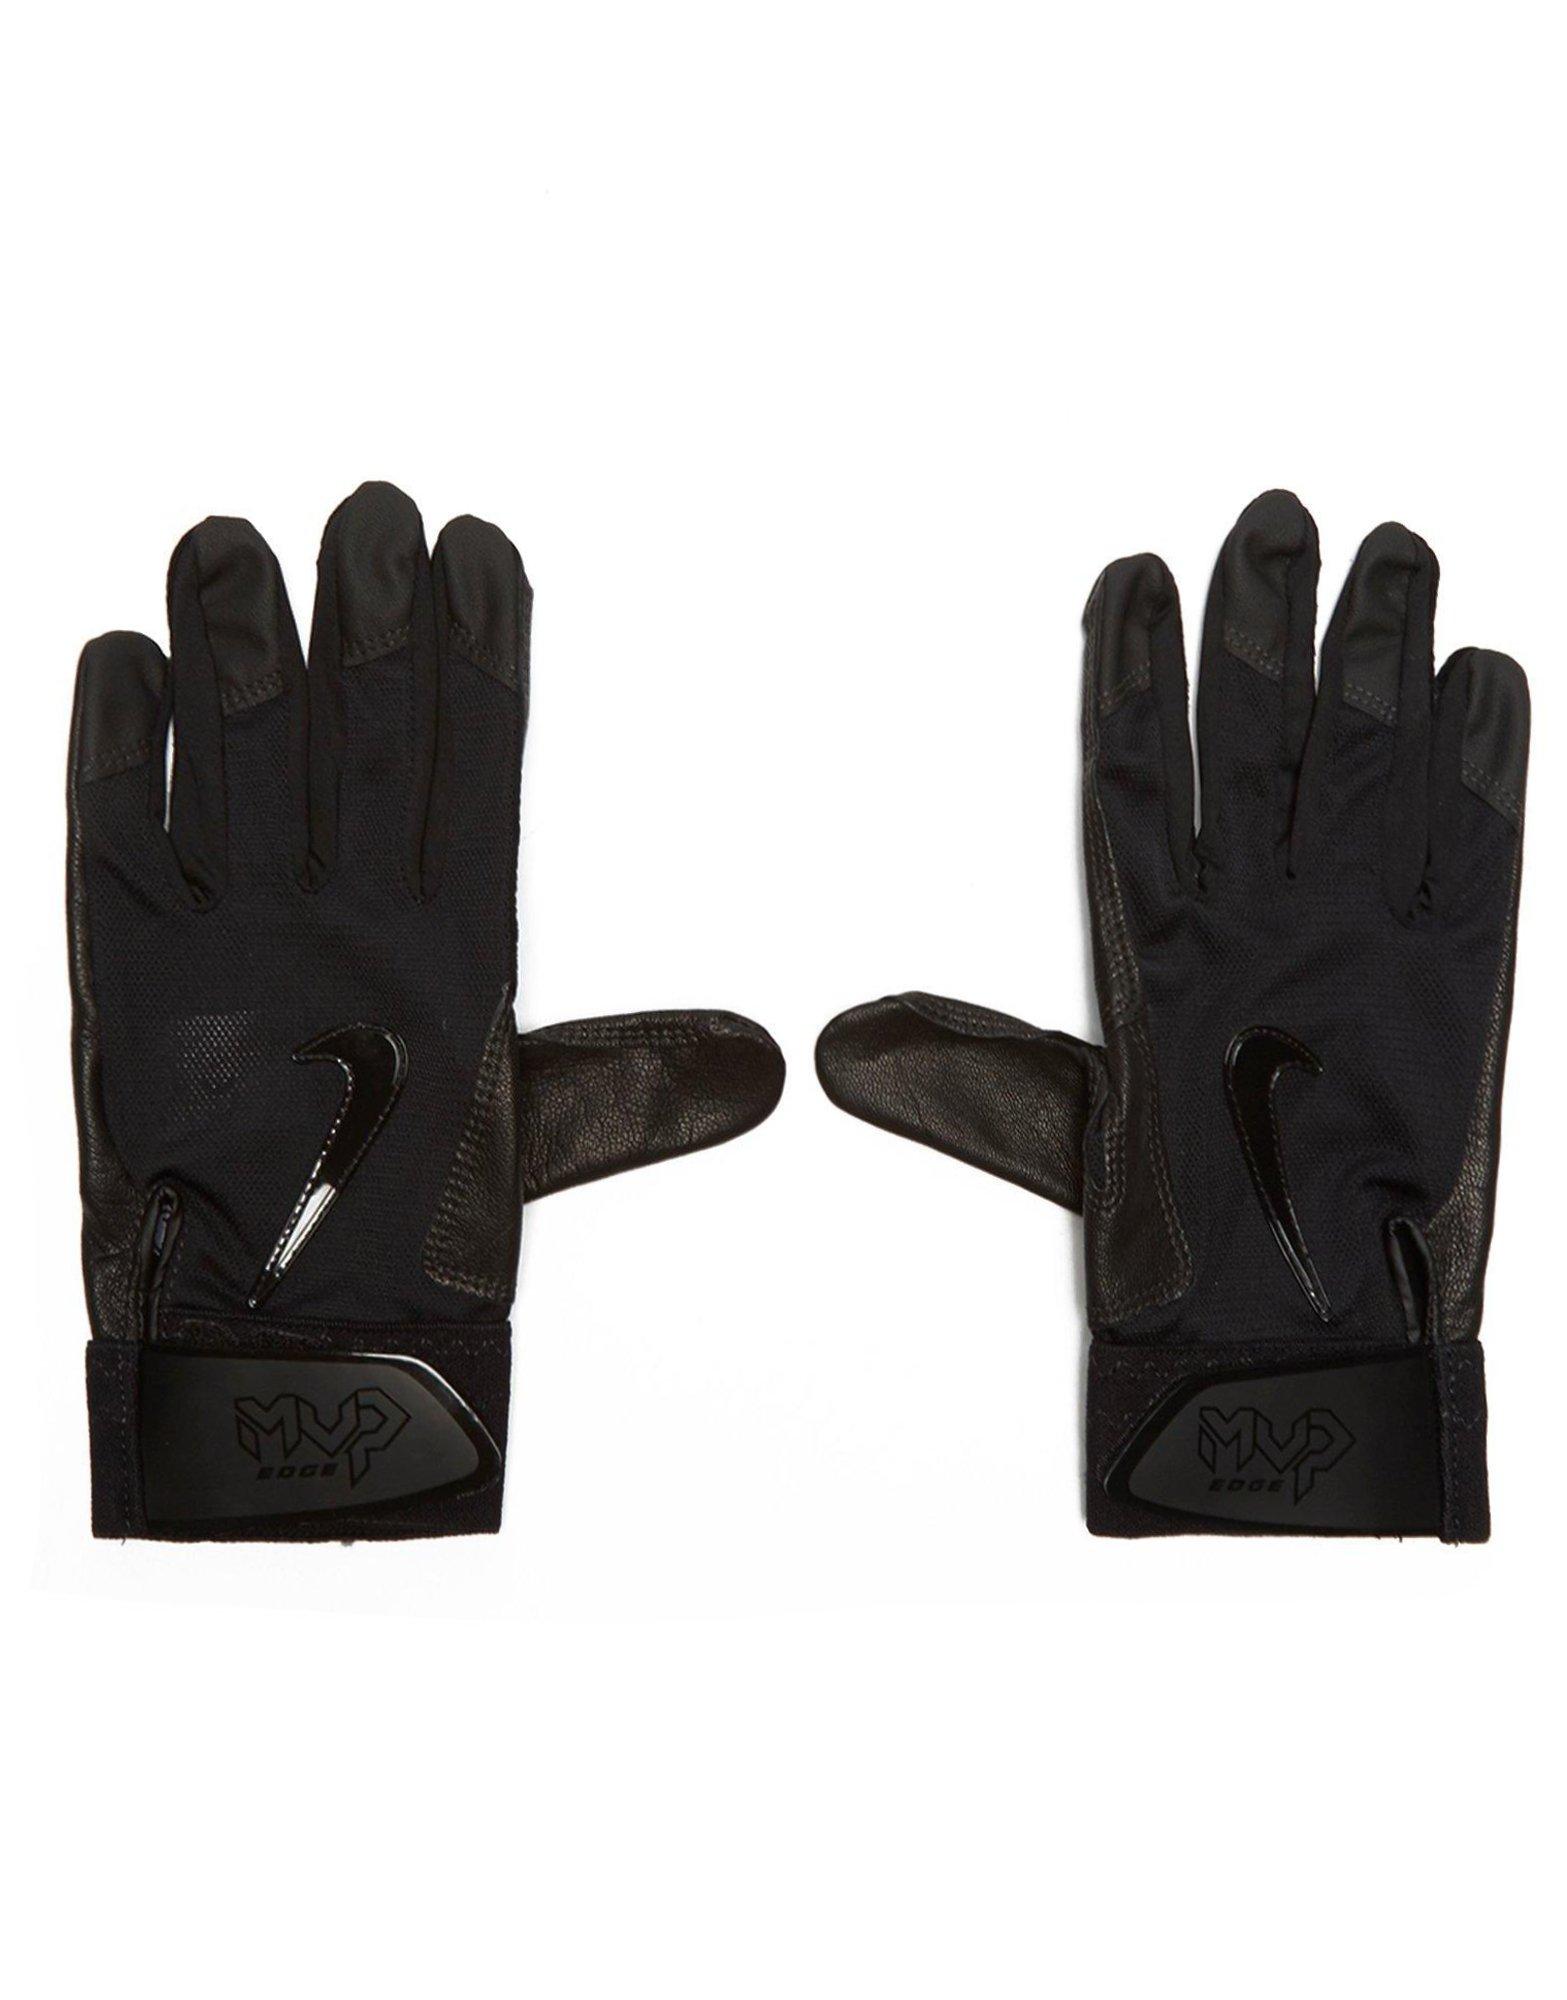 nike mvp gloves black